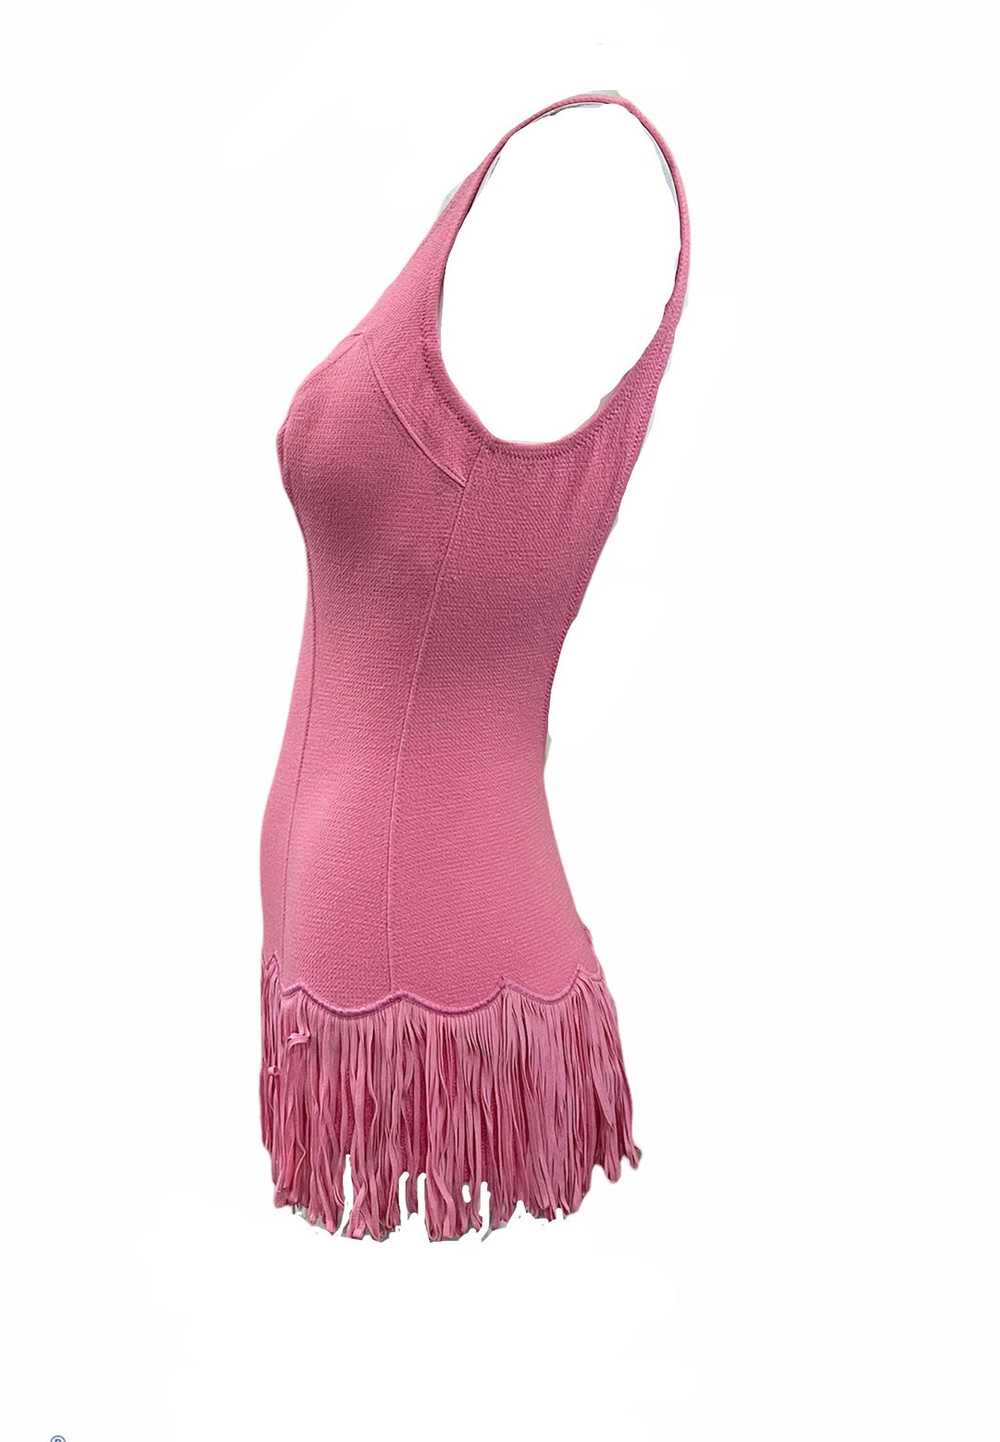 Deweese 60s Pink Fringed Swimsuit Ensemble - image 2